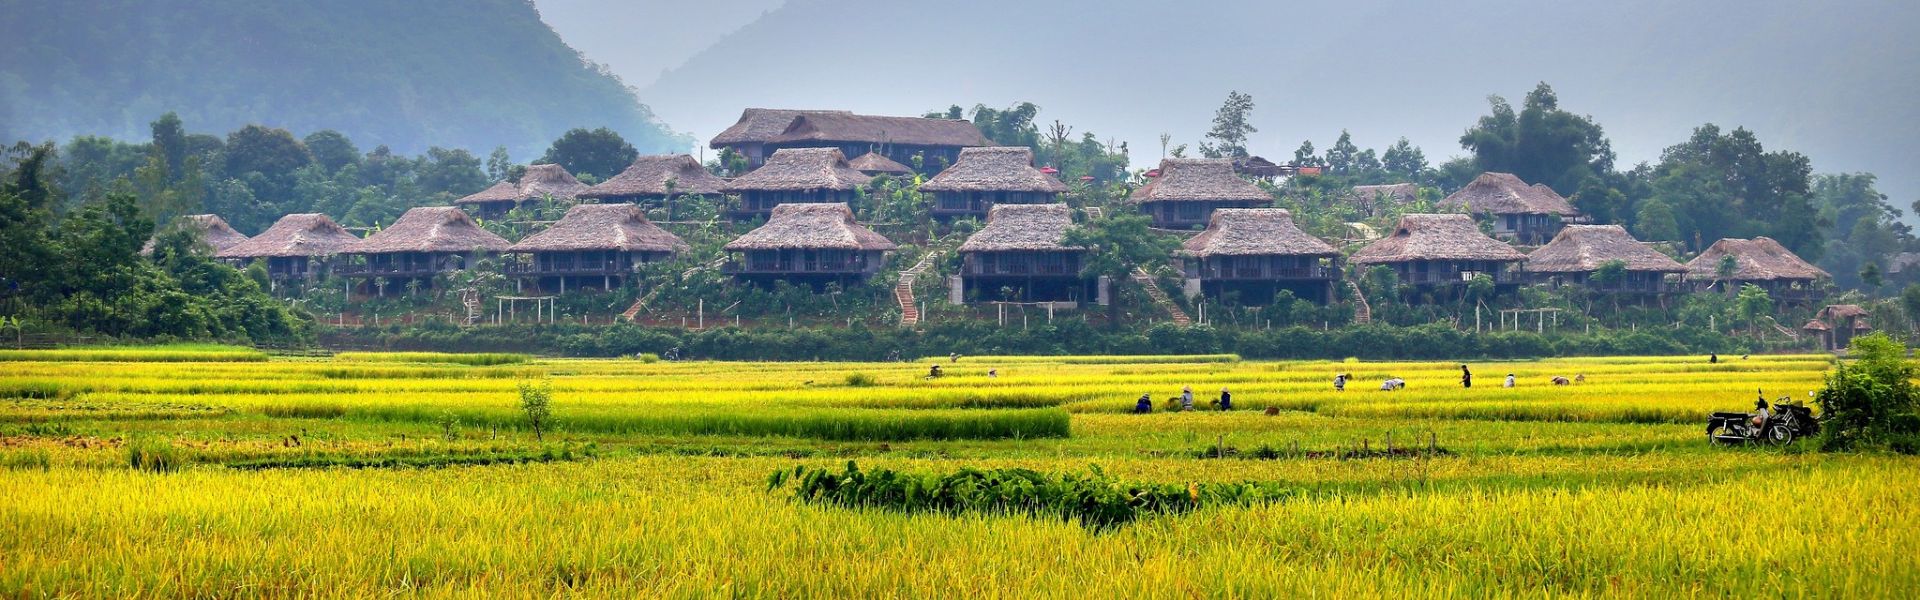 Mai Chau - Consejos de viaje | Guía de viajes a Vietnam